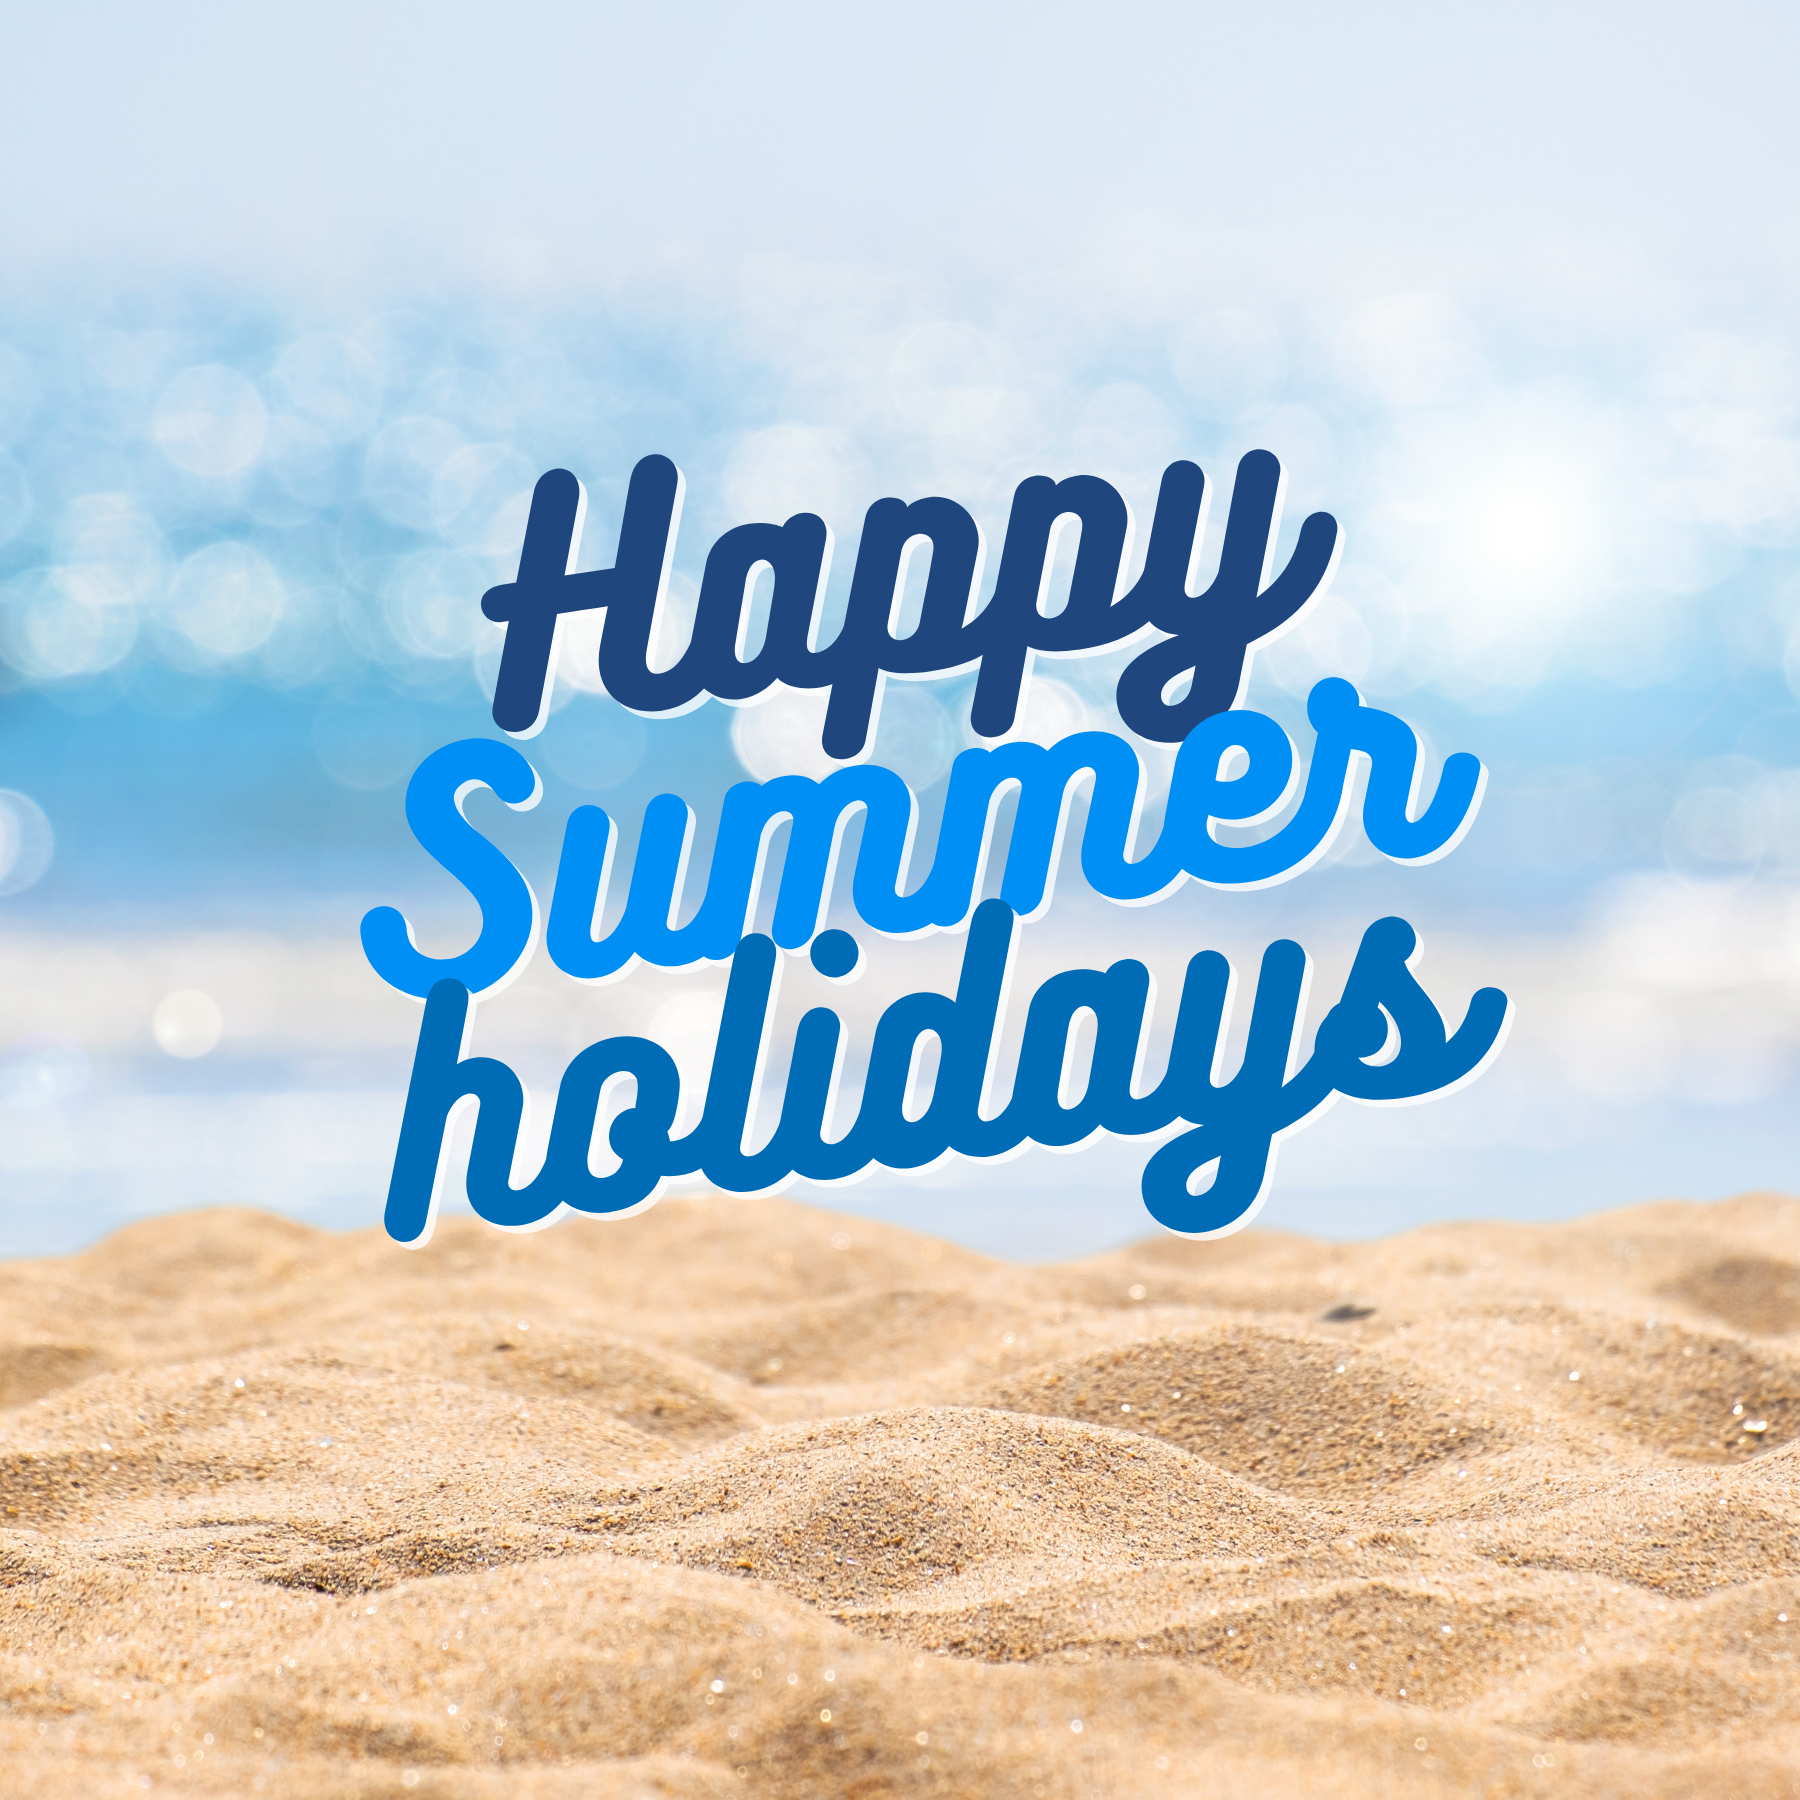 summer holidays at Eta-com